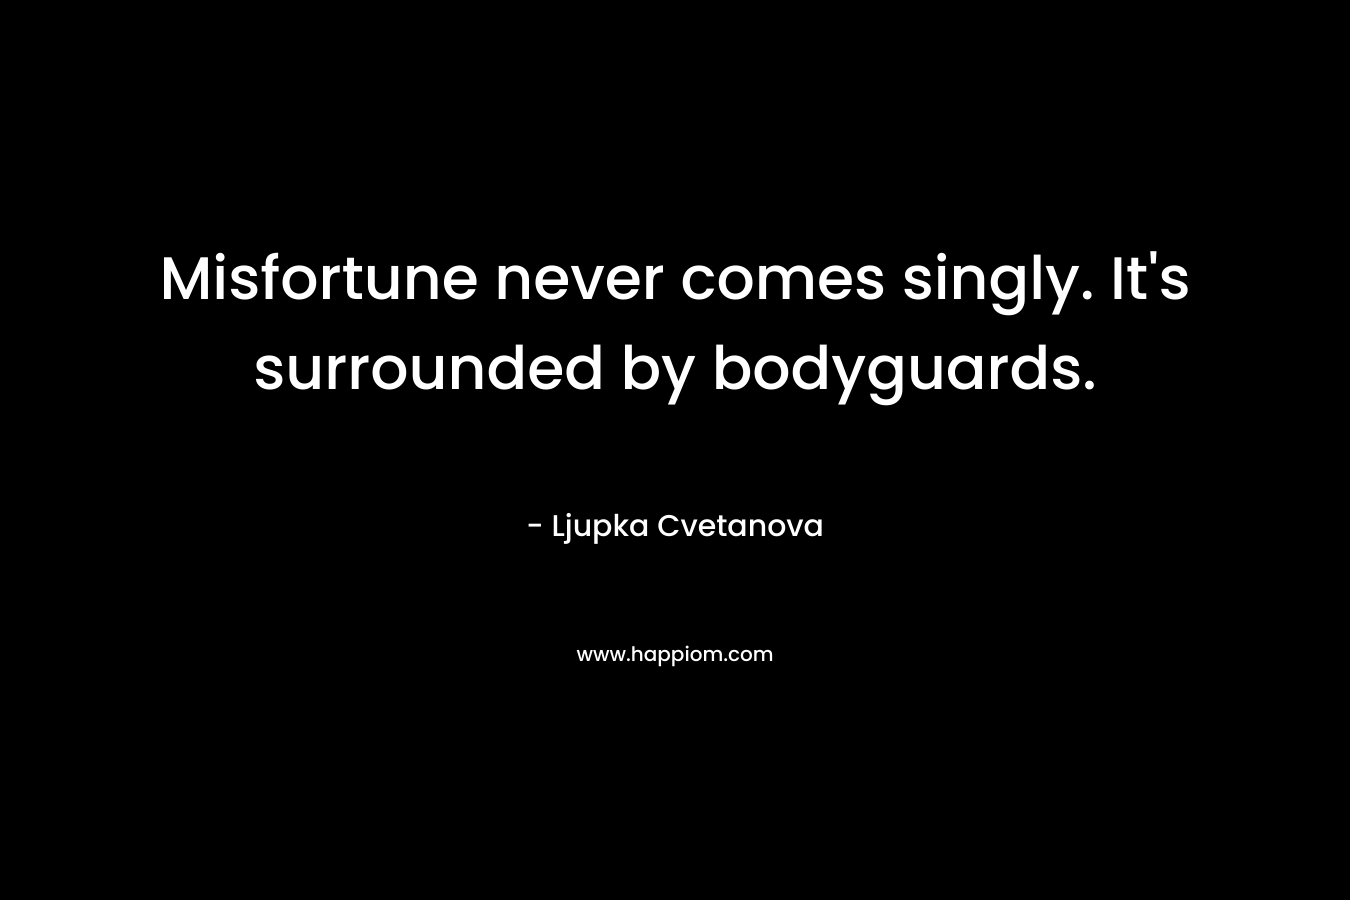 Misfortune never comes singly. It’s surrounded by bodyguards. – Ljupka Cvetanova